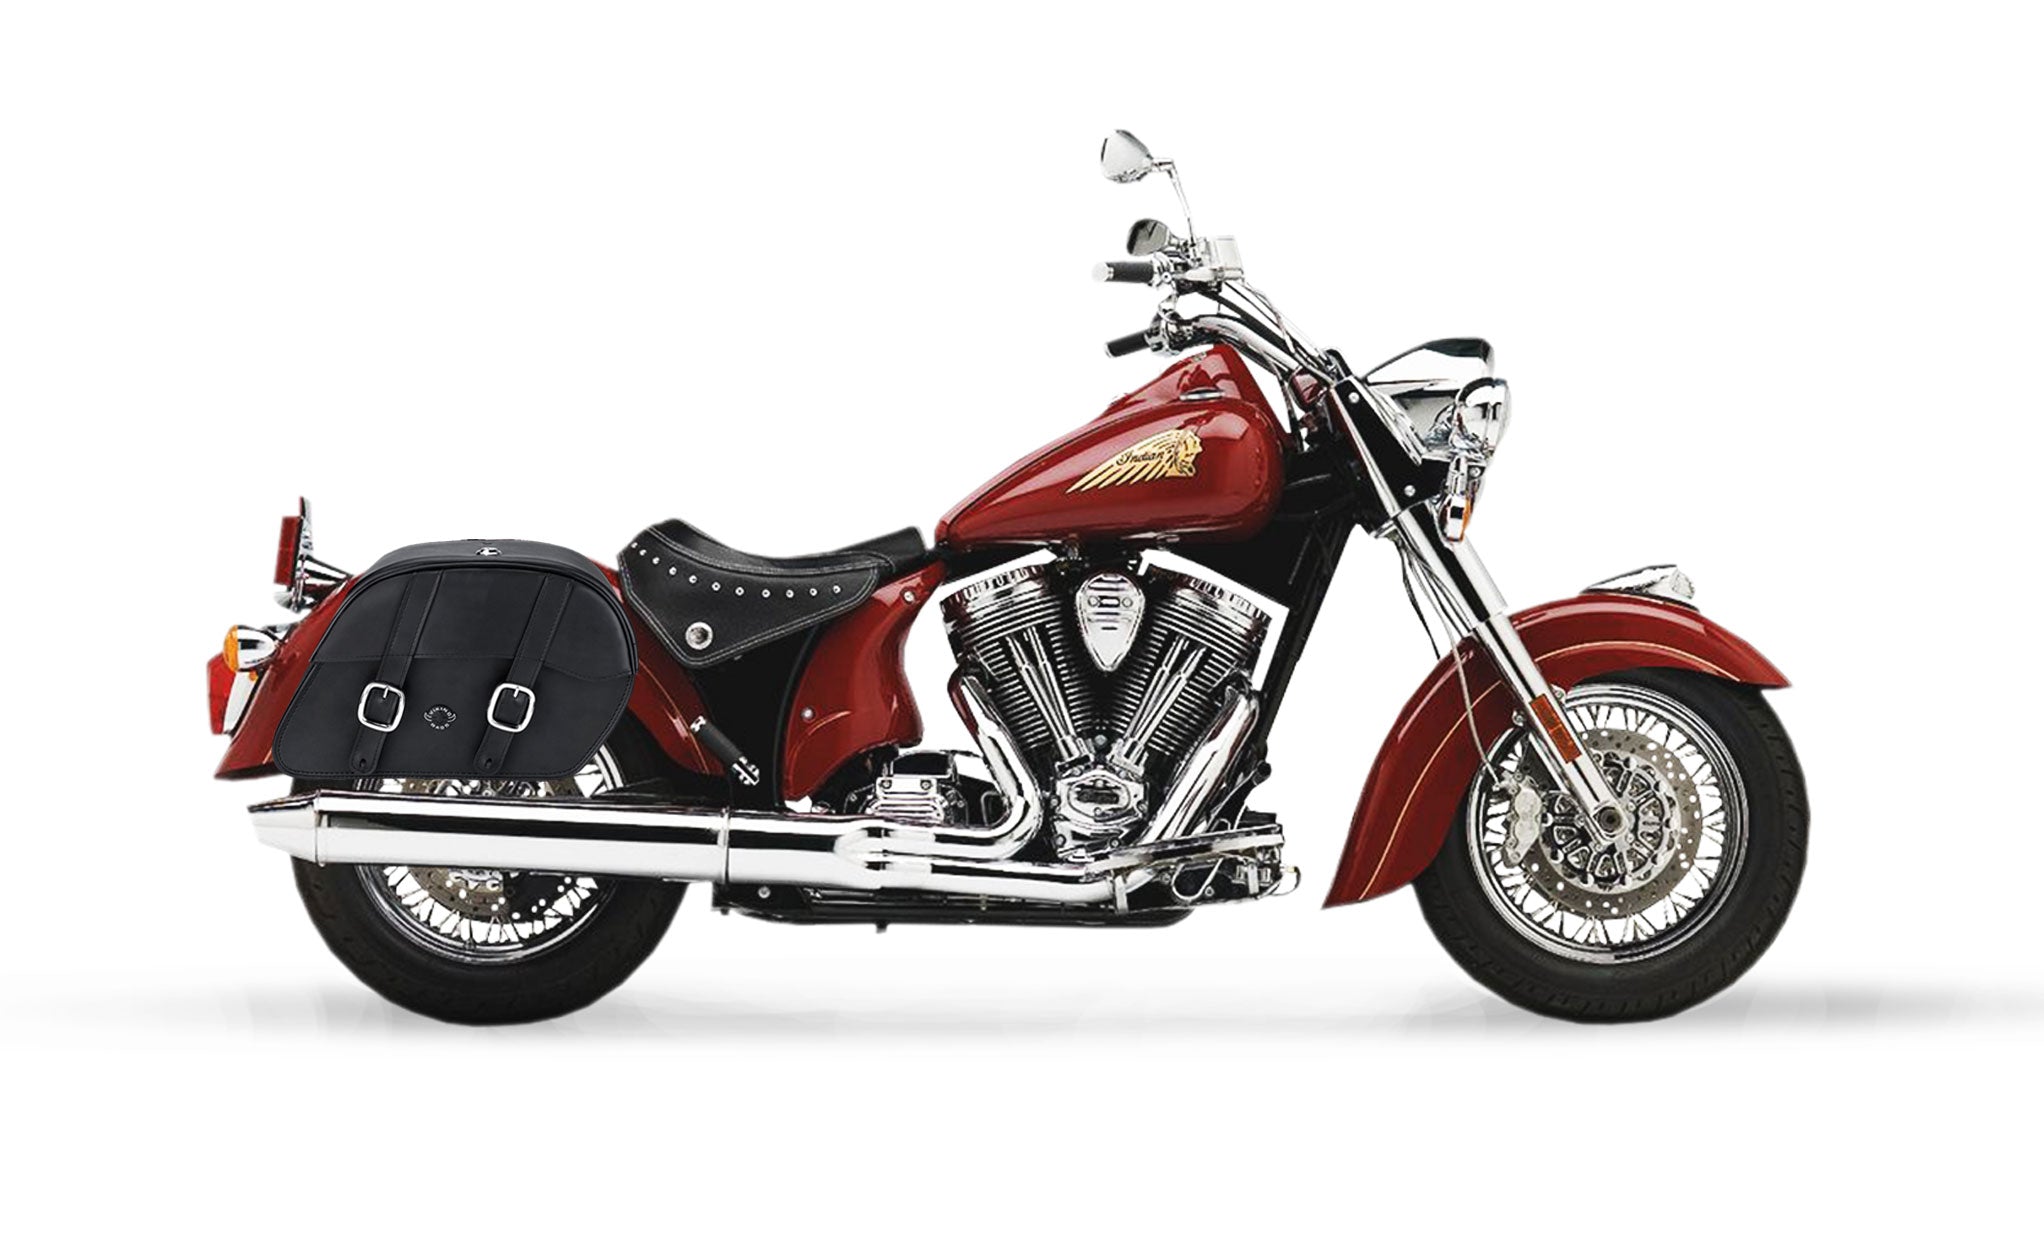 Viking Skarner Large Indian Chief Standard Leather Motorcycle Saddlebags on Bike Photo @expand